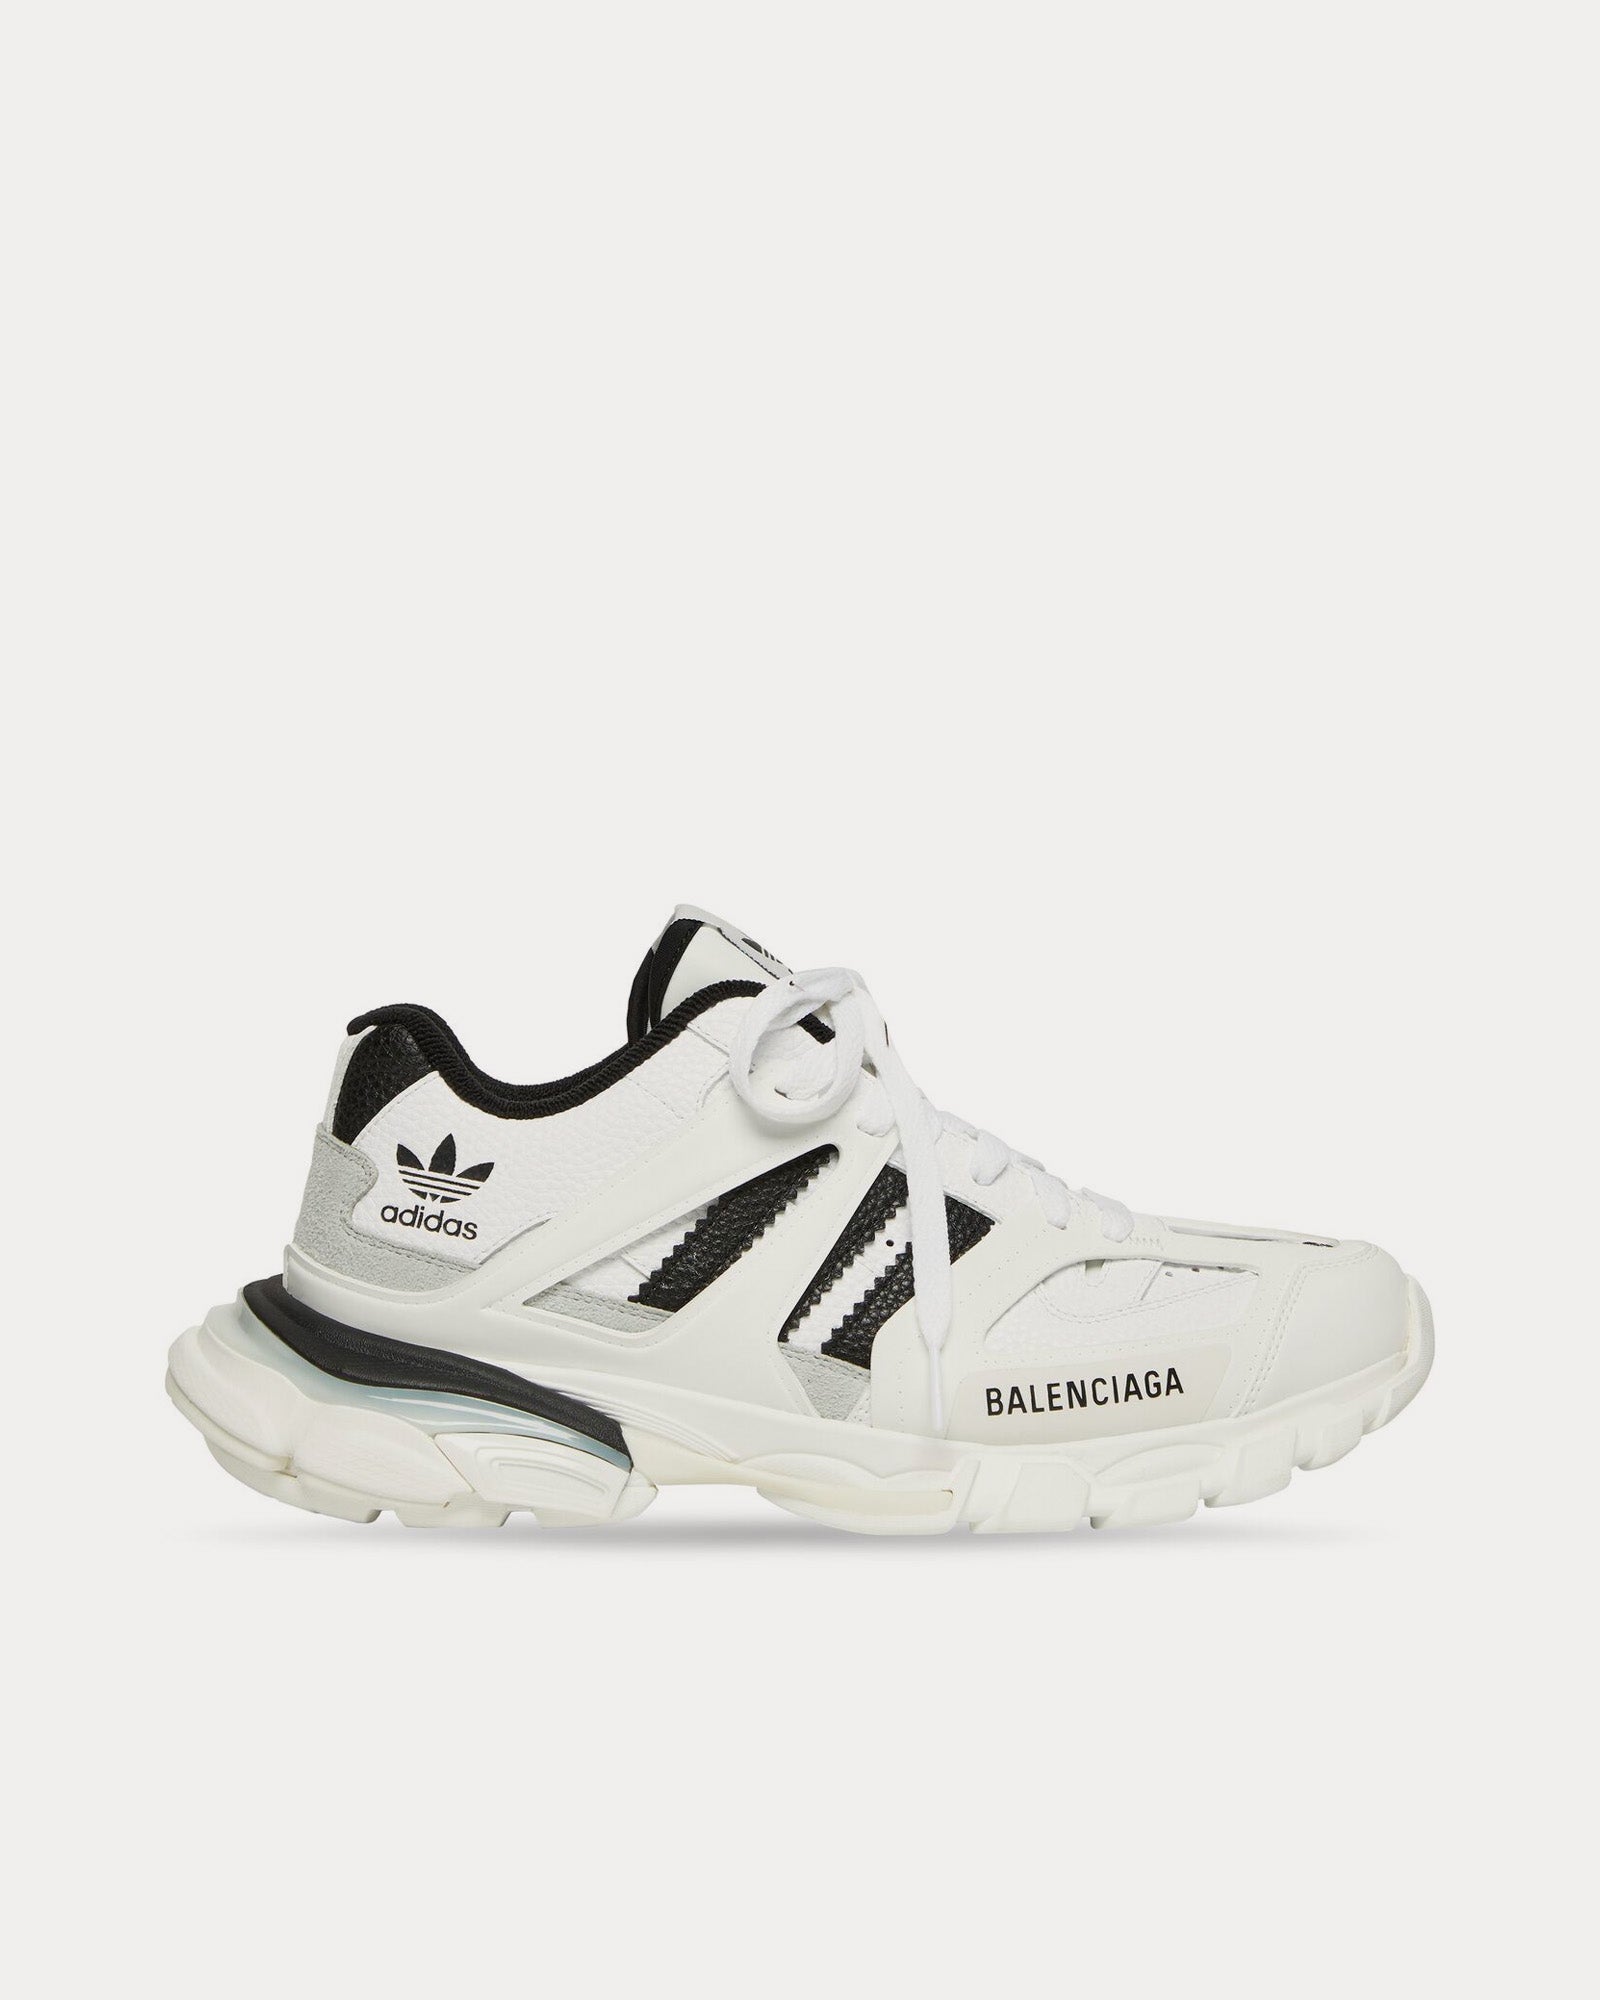 Balenciaga x Adidas - Track Forum White / Black Low Top Sneakers